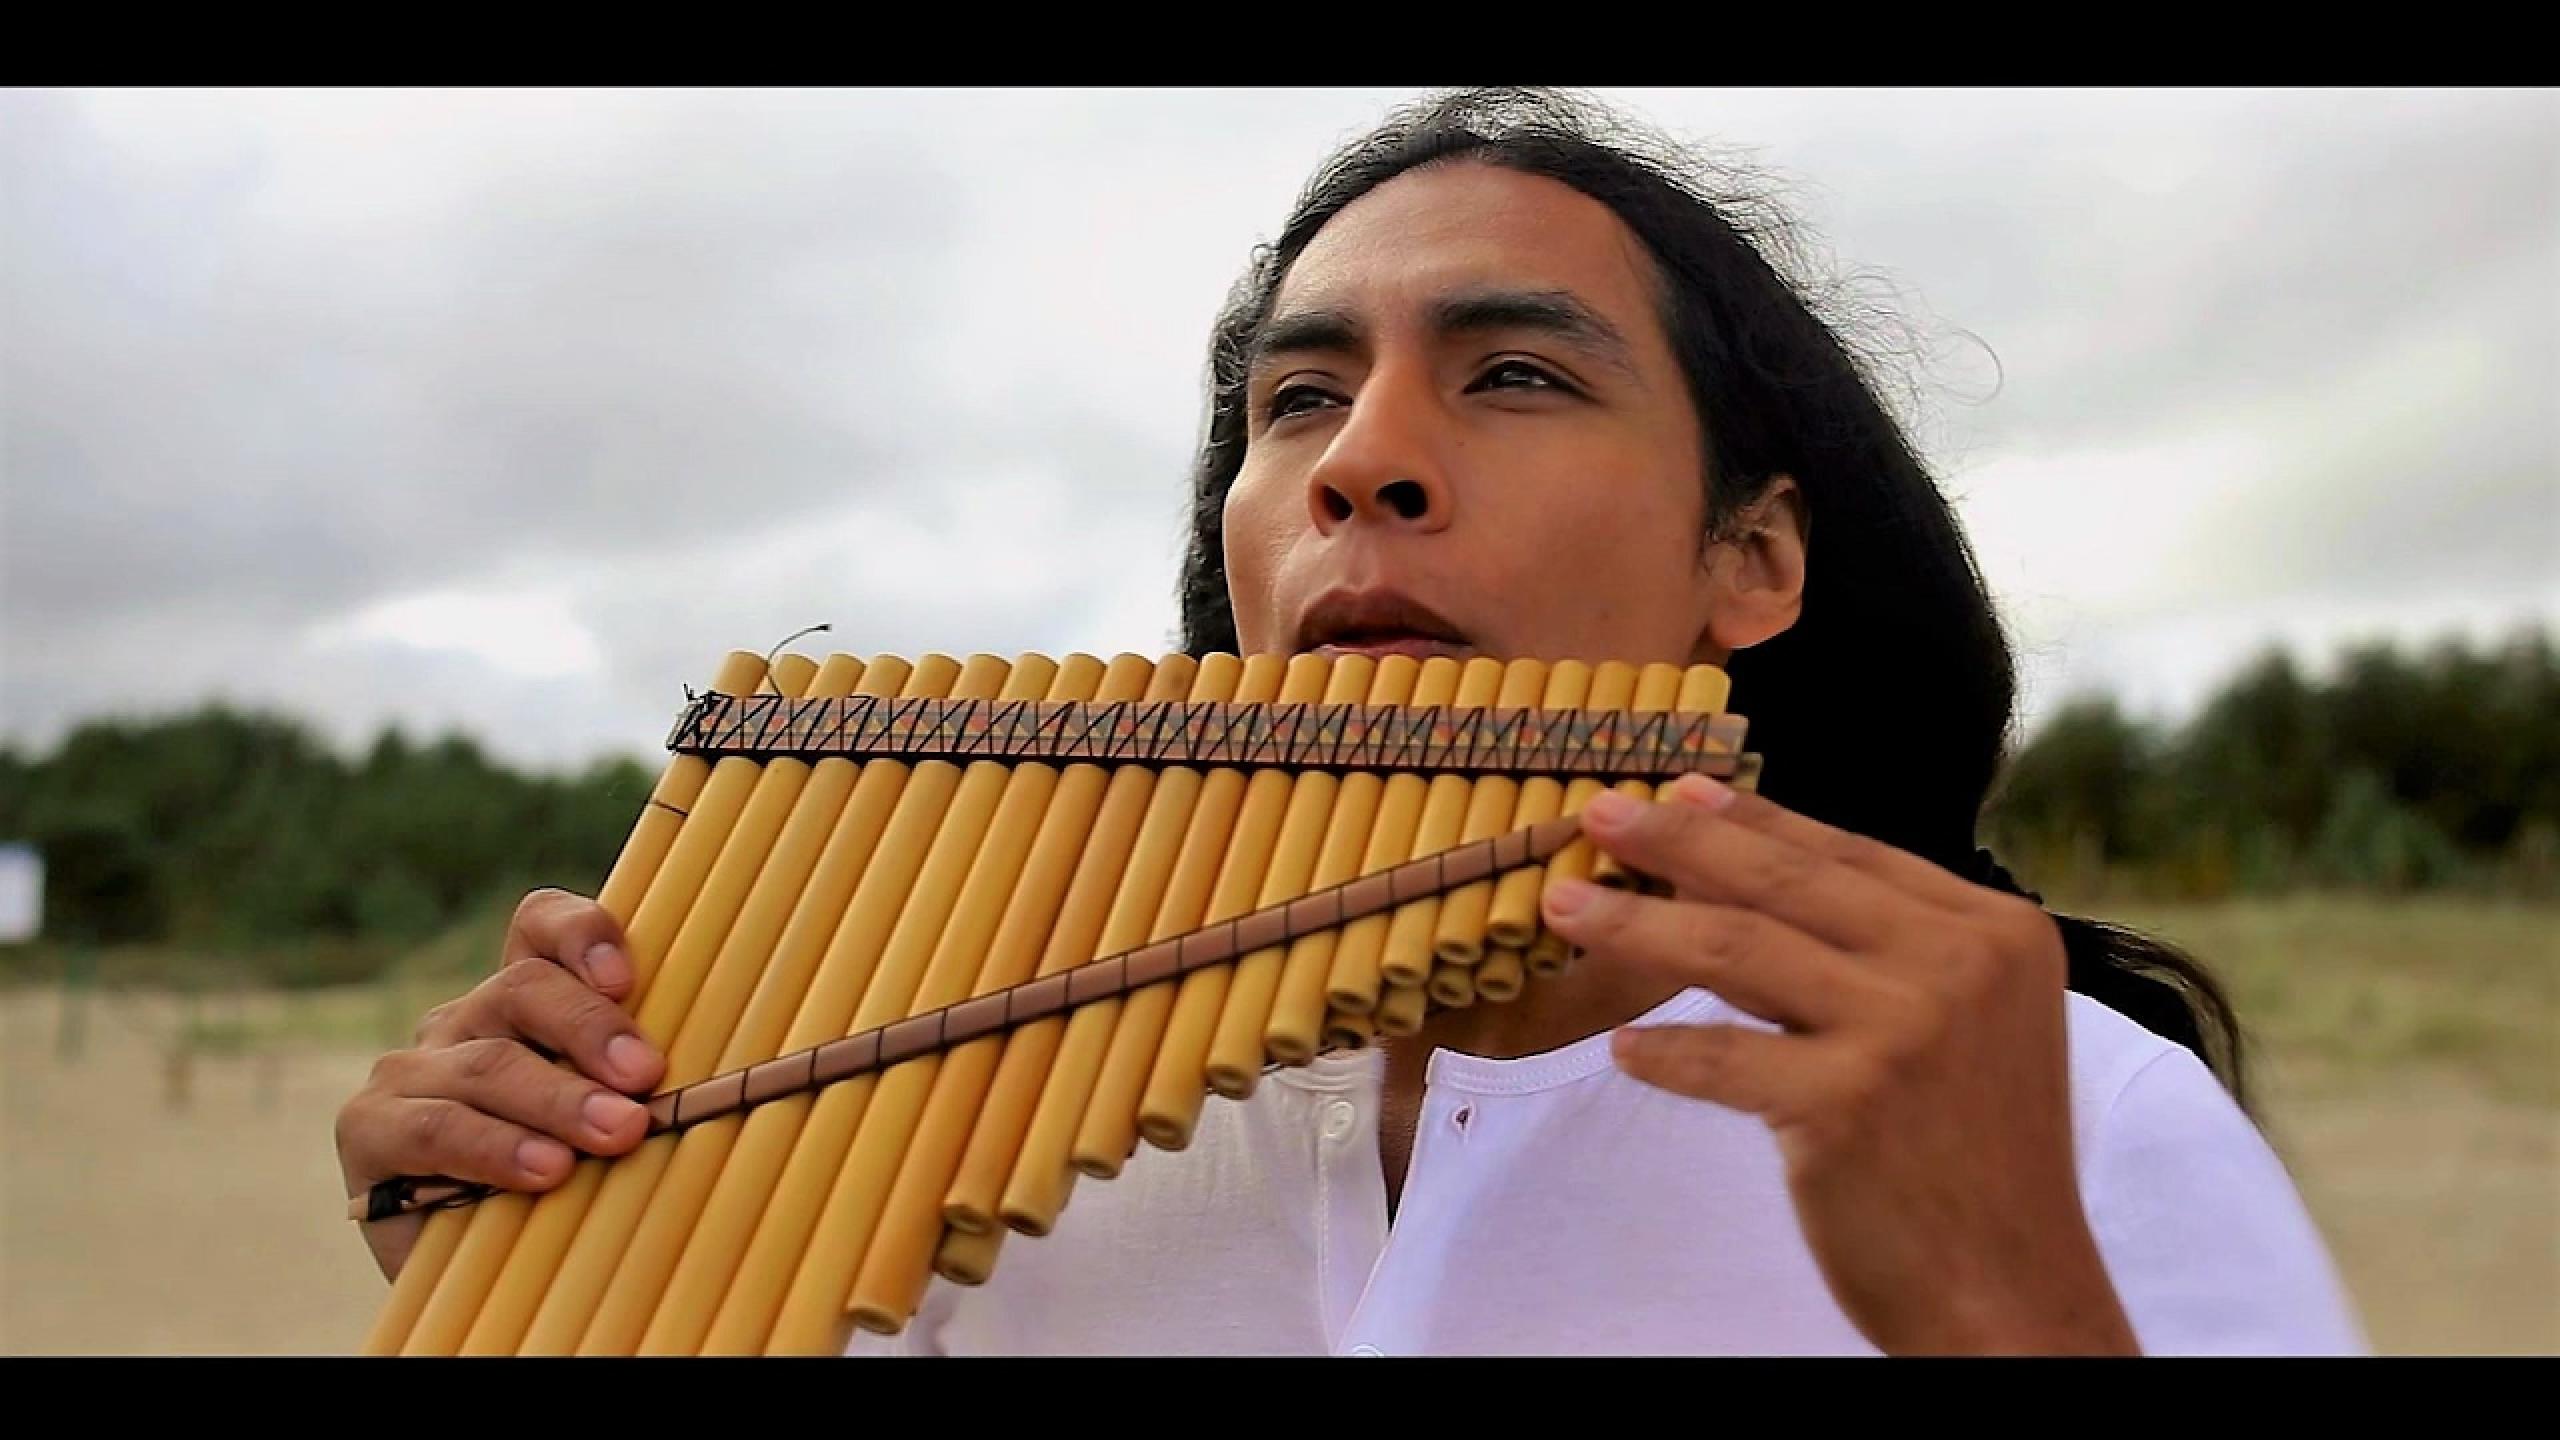 Музыкальный инструмент пана. Alexandro Querevalu. Кугиклы музыкальный инструмент. Шошан музыкальный инструмент. Многоствольная флейта пана.